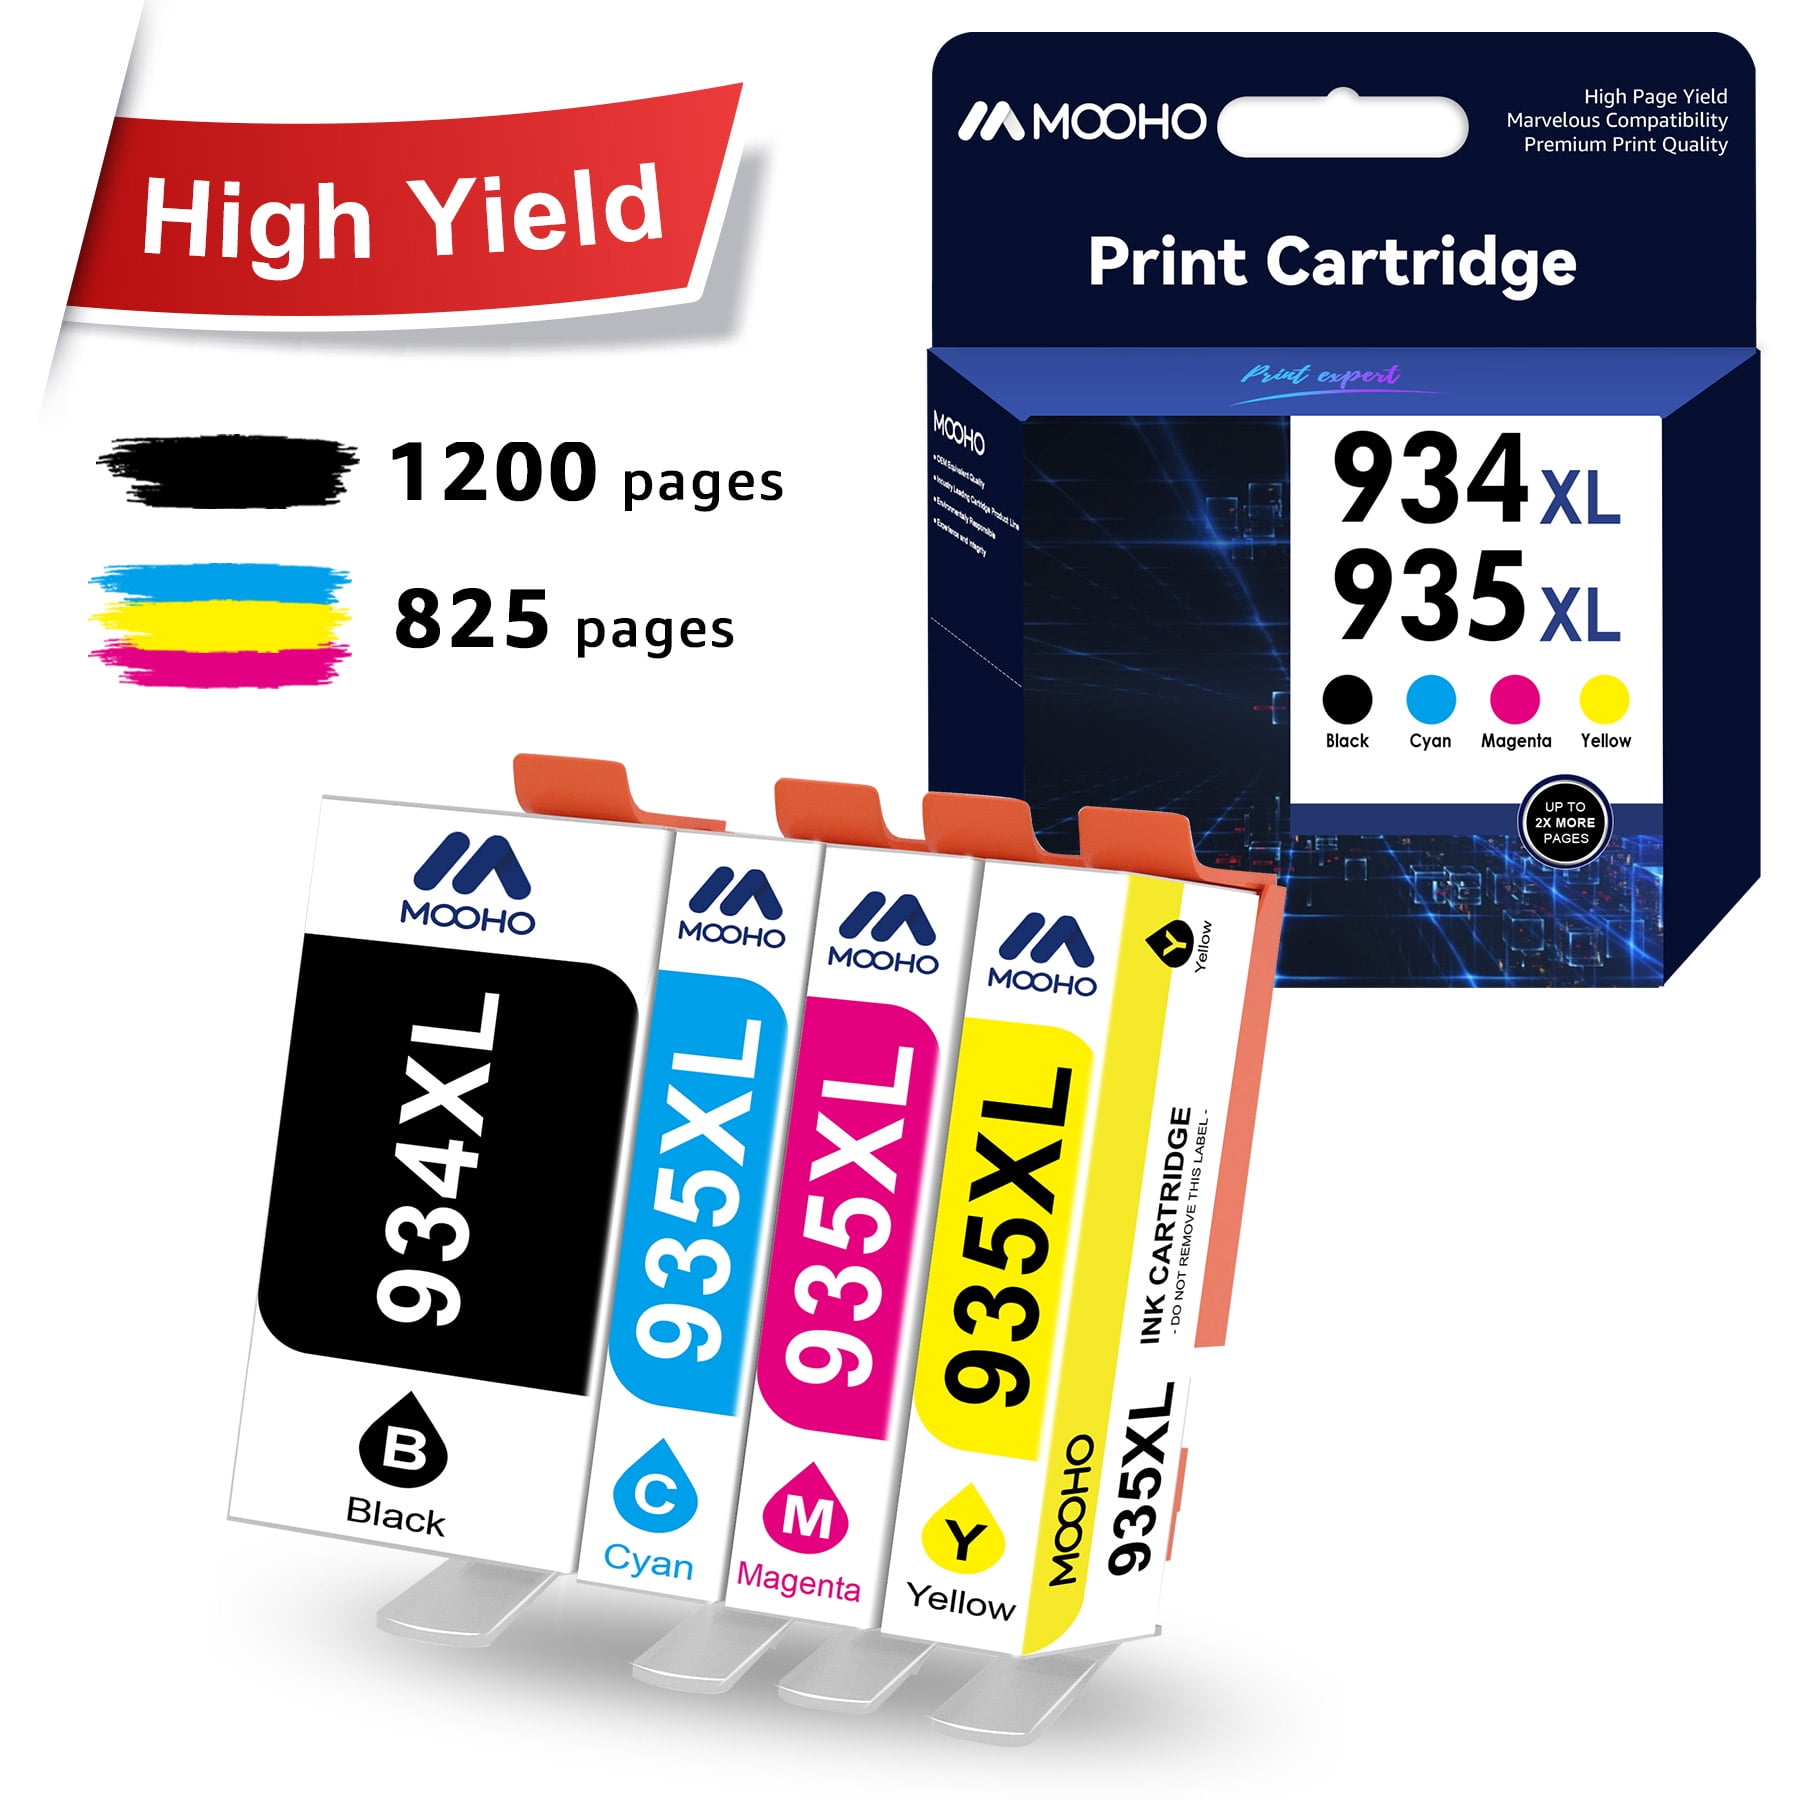 Replacement HP 935 934 Ink Cartridges XL 10-Pack - High Yield: 4 Black, 2  Cyan, 2 Magenta, 2 Yellow